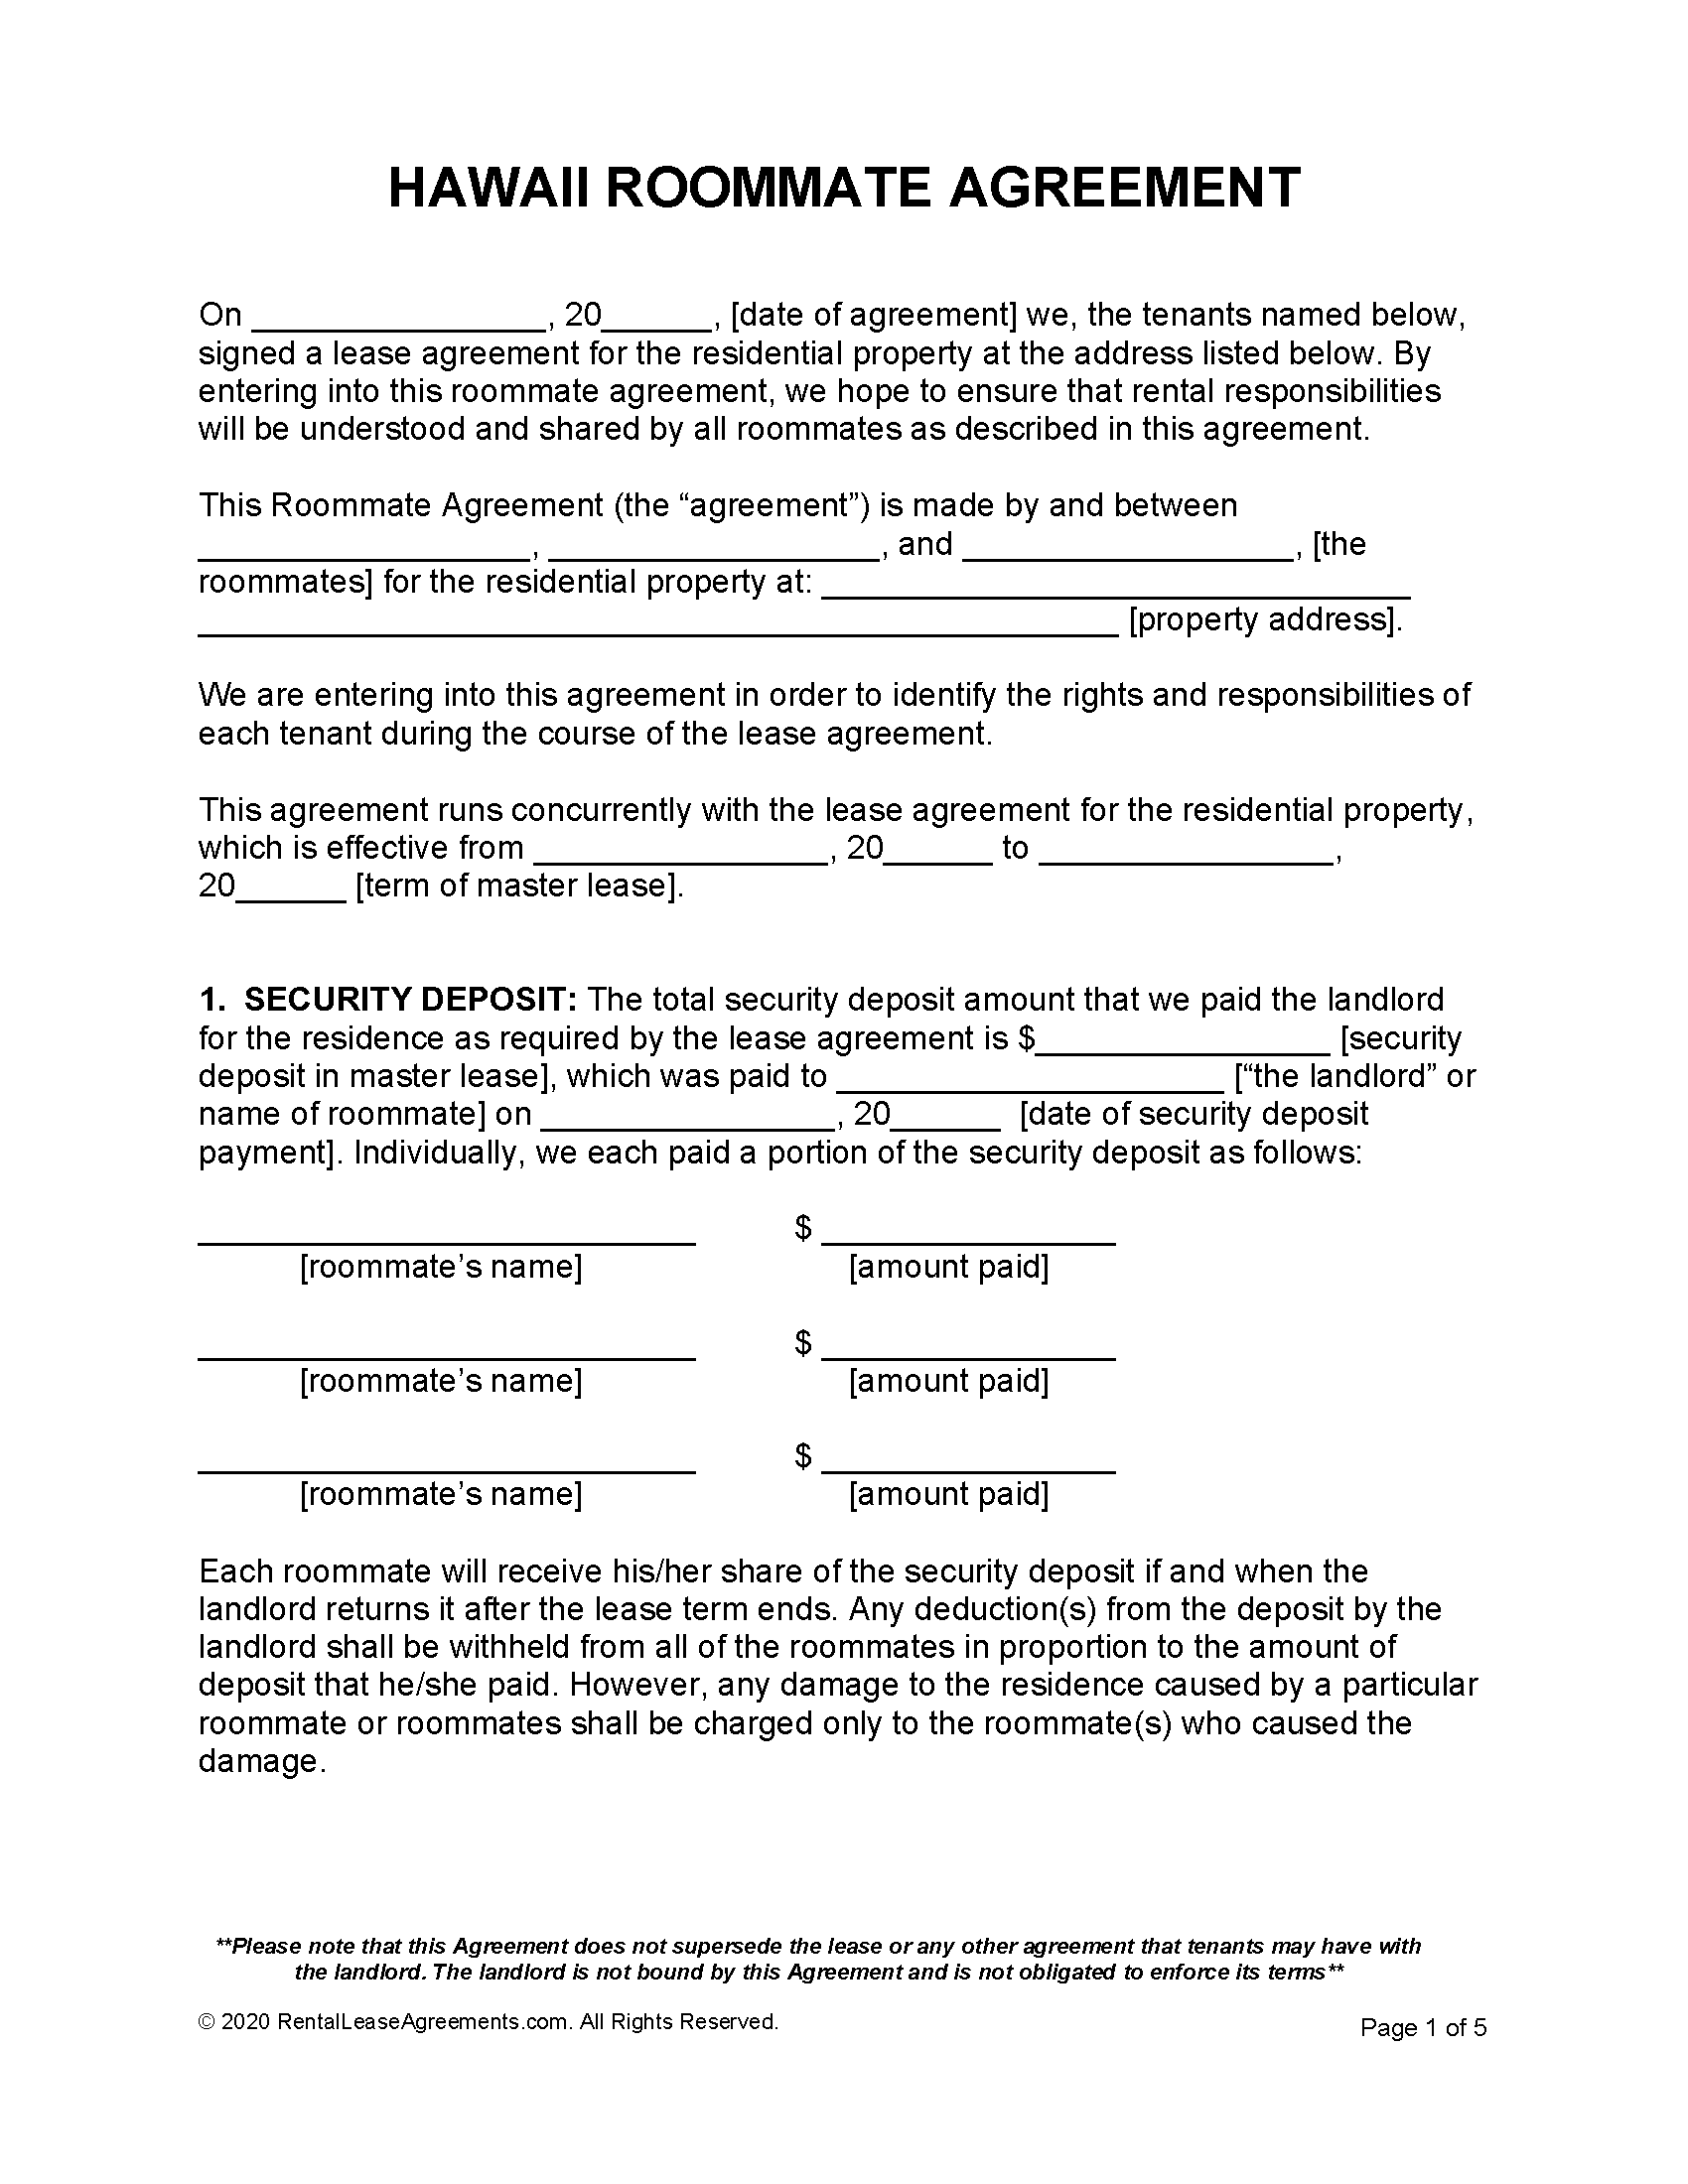 free-hawaii-roommate-agreement-pdf-ms-word